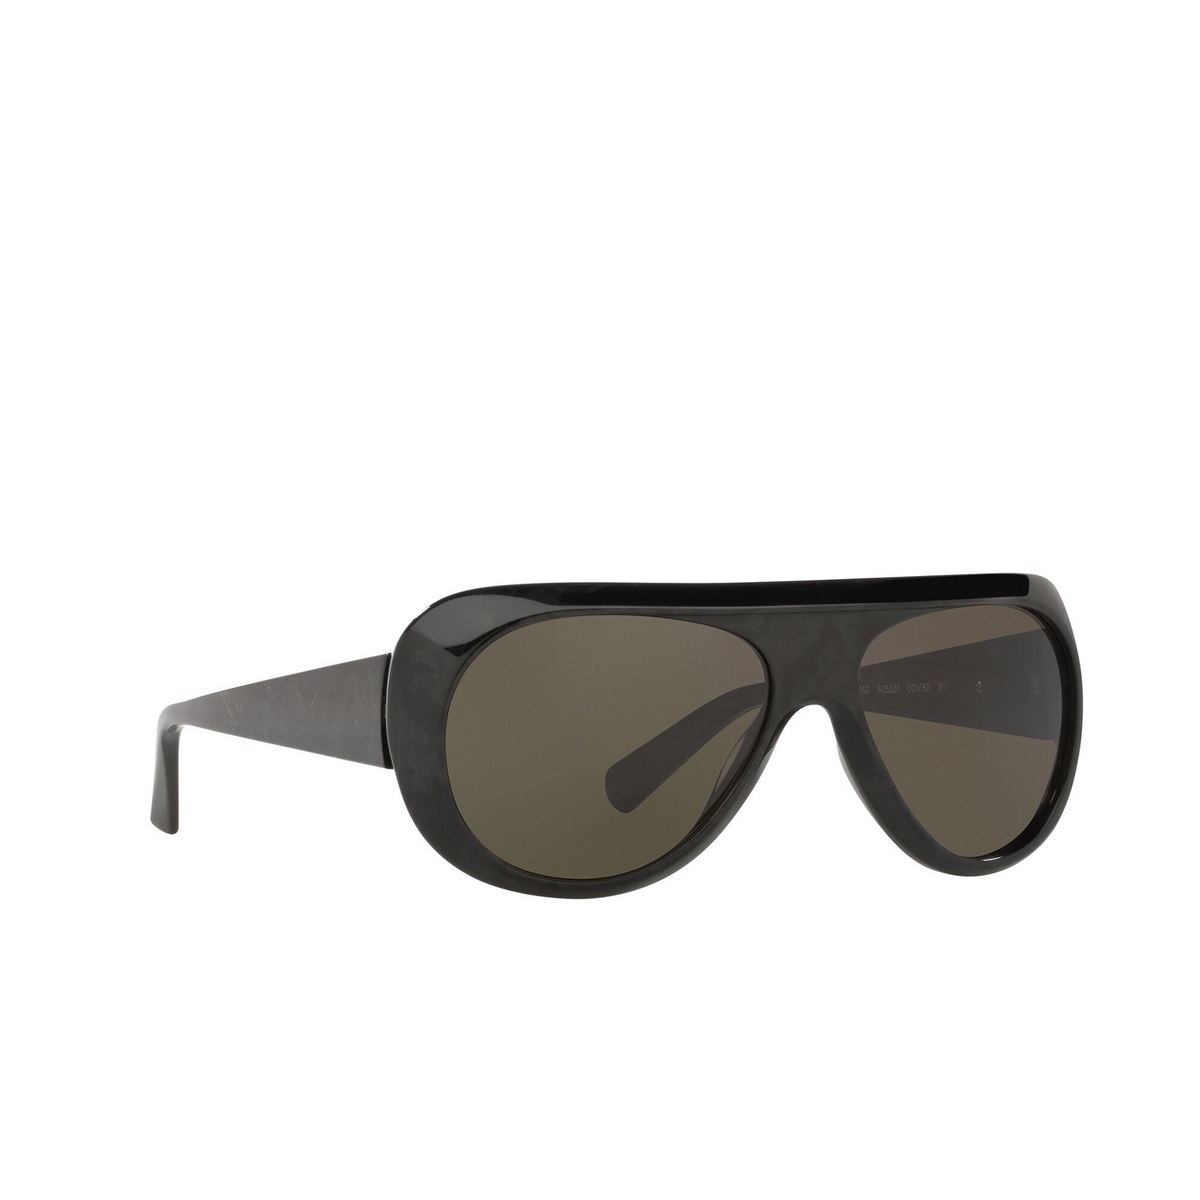 Alain Mikli® Aviator Sunglasses: Marmion A05051 color Noir Mikli 001/82 - three-quarters view.